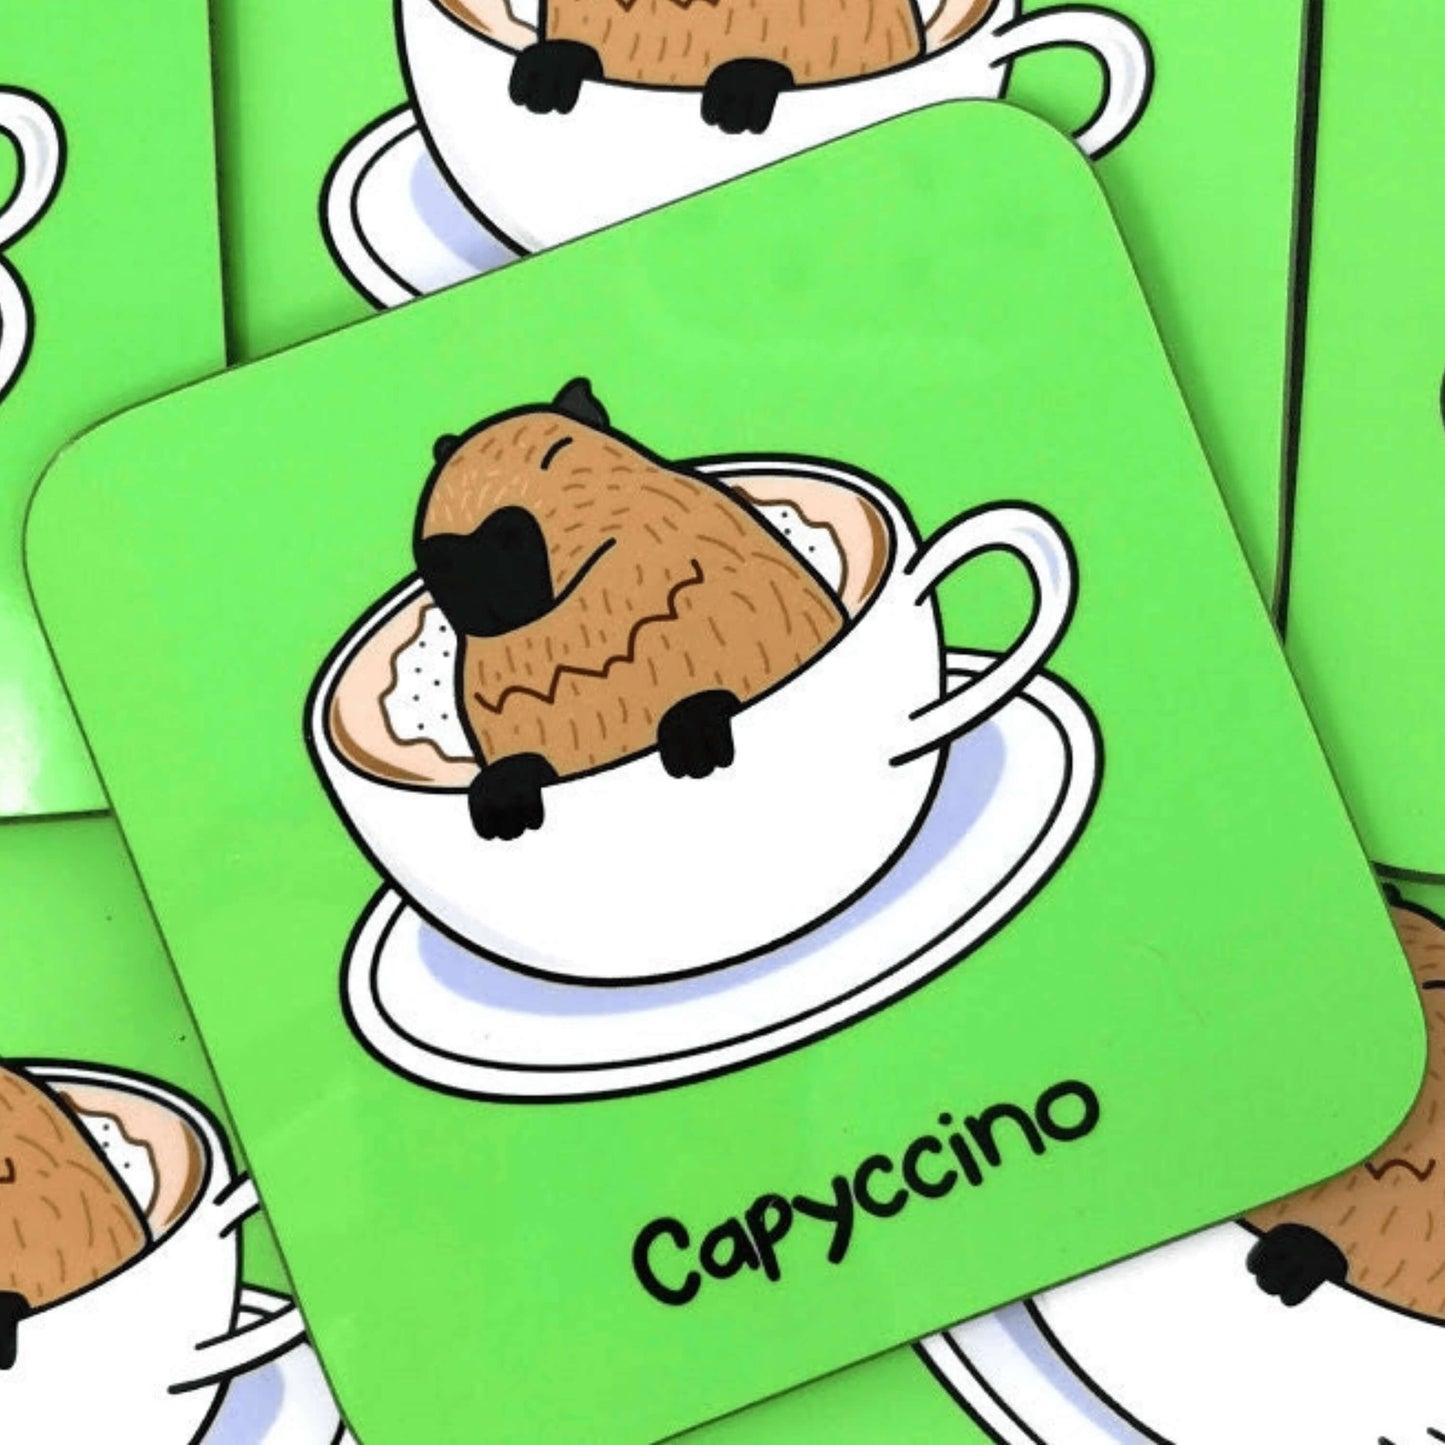 The Capyccino - Capybara Cappuccino Coaster on multiple other copies of the coaster. The wooden green coaster features a cute brown capybara sat peeking over a cappuccino in a white mug and saucer, underneath reads capyccino in black.